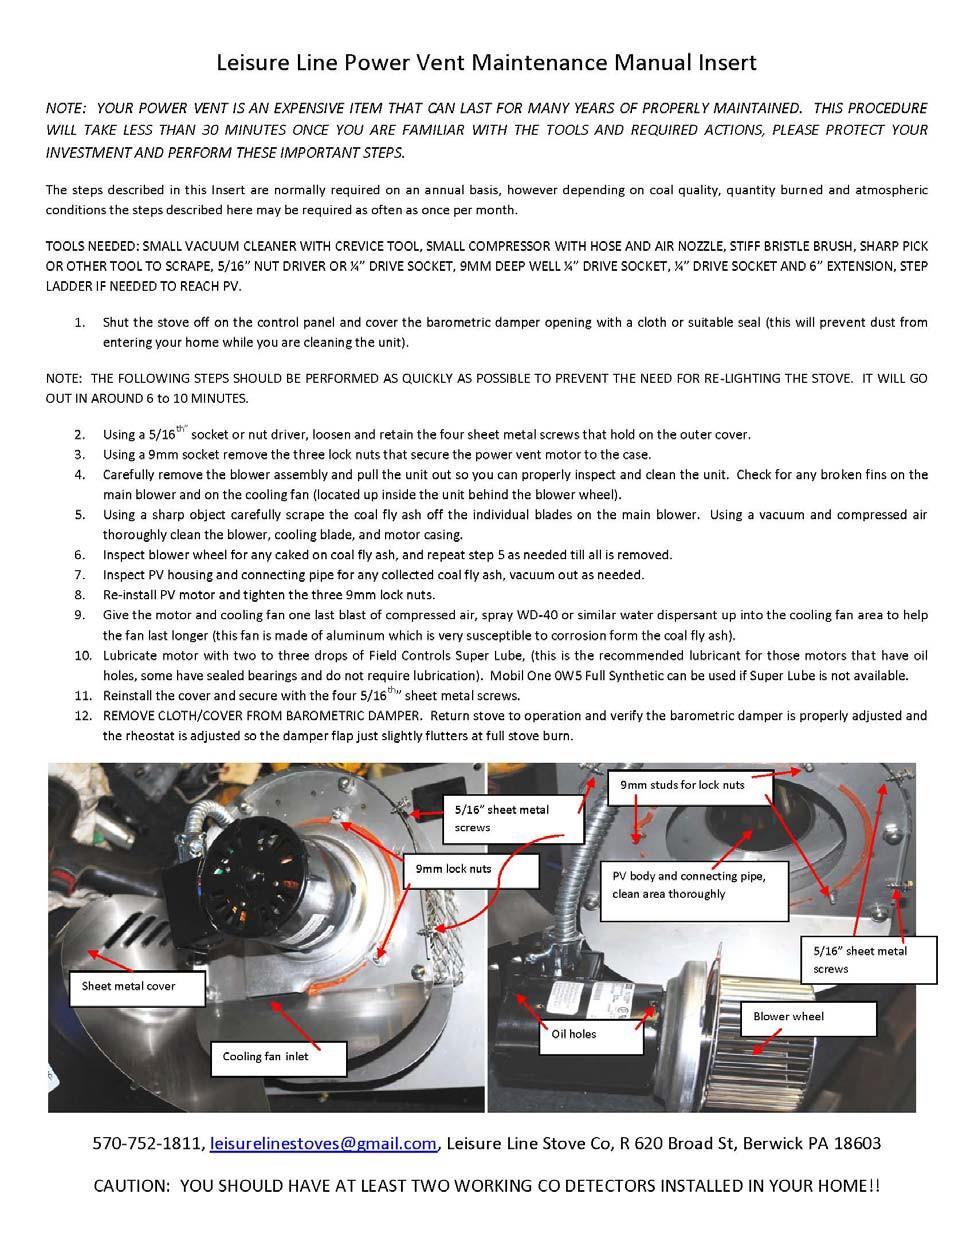 Appendix B SWG 4HDS/AF Power Vent Maintenance Instructions Note: Type AF